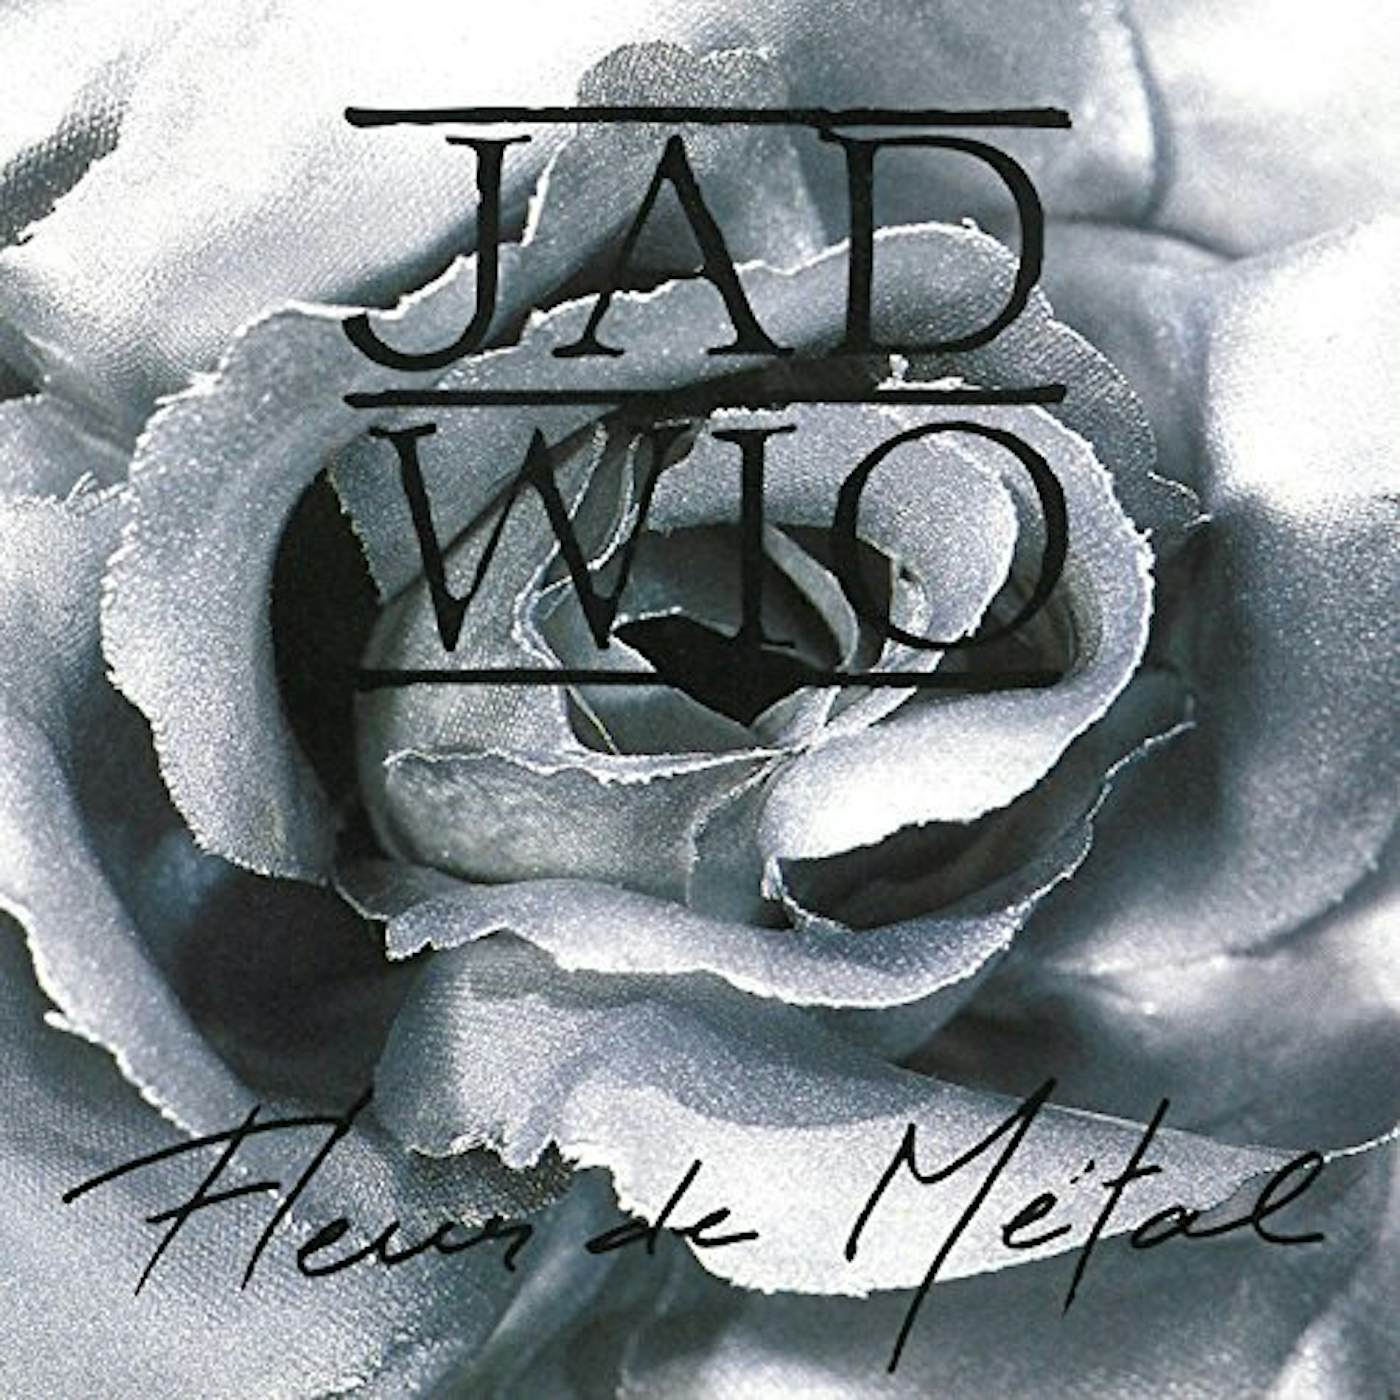 Jad Wio FLEUR DE METAL Vinyl Record